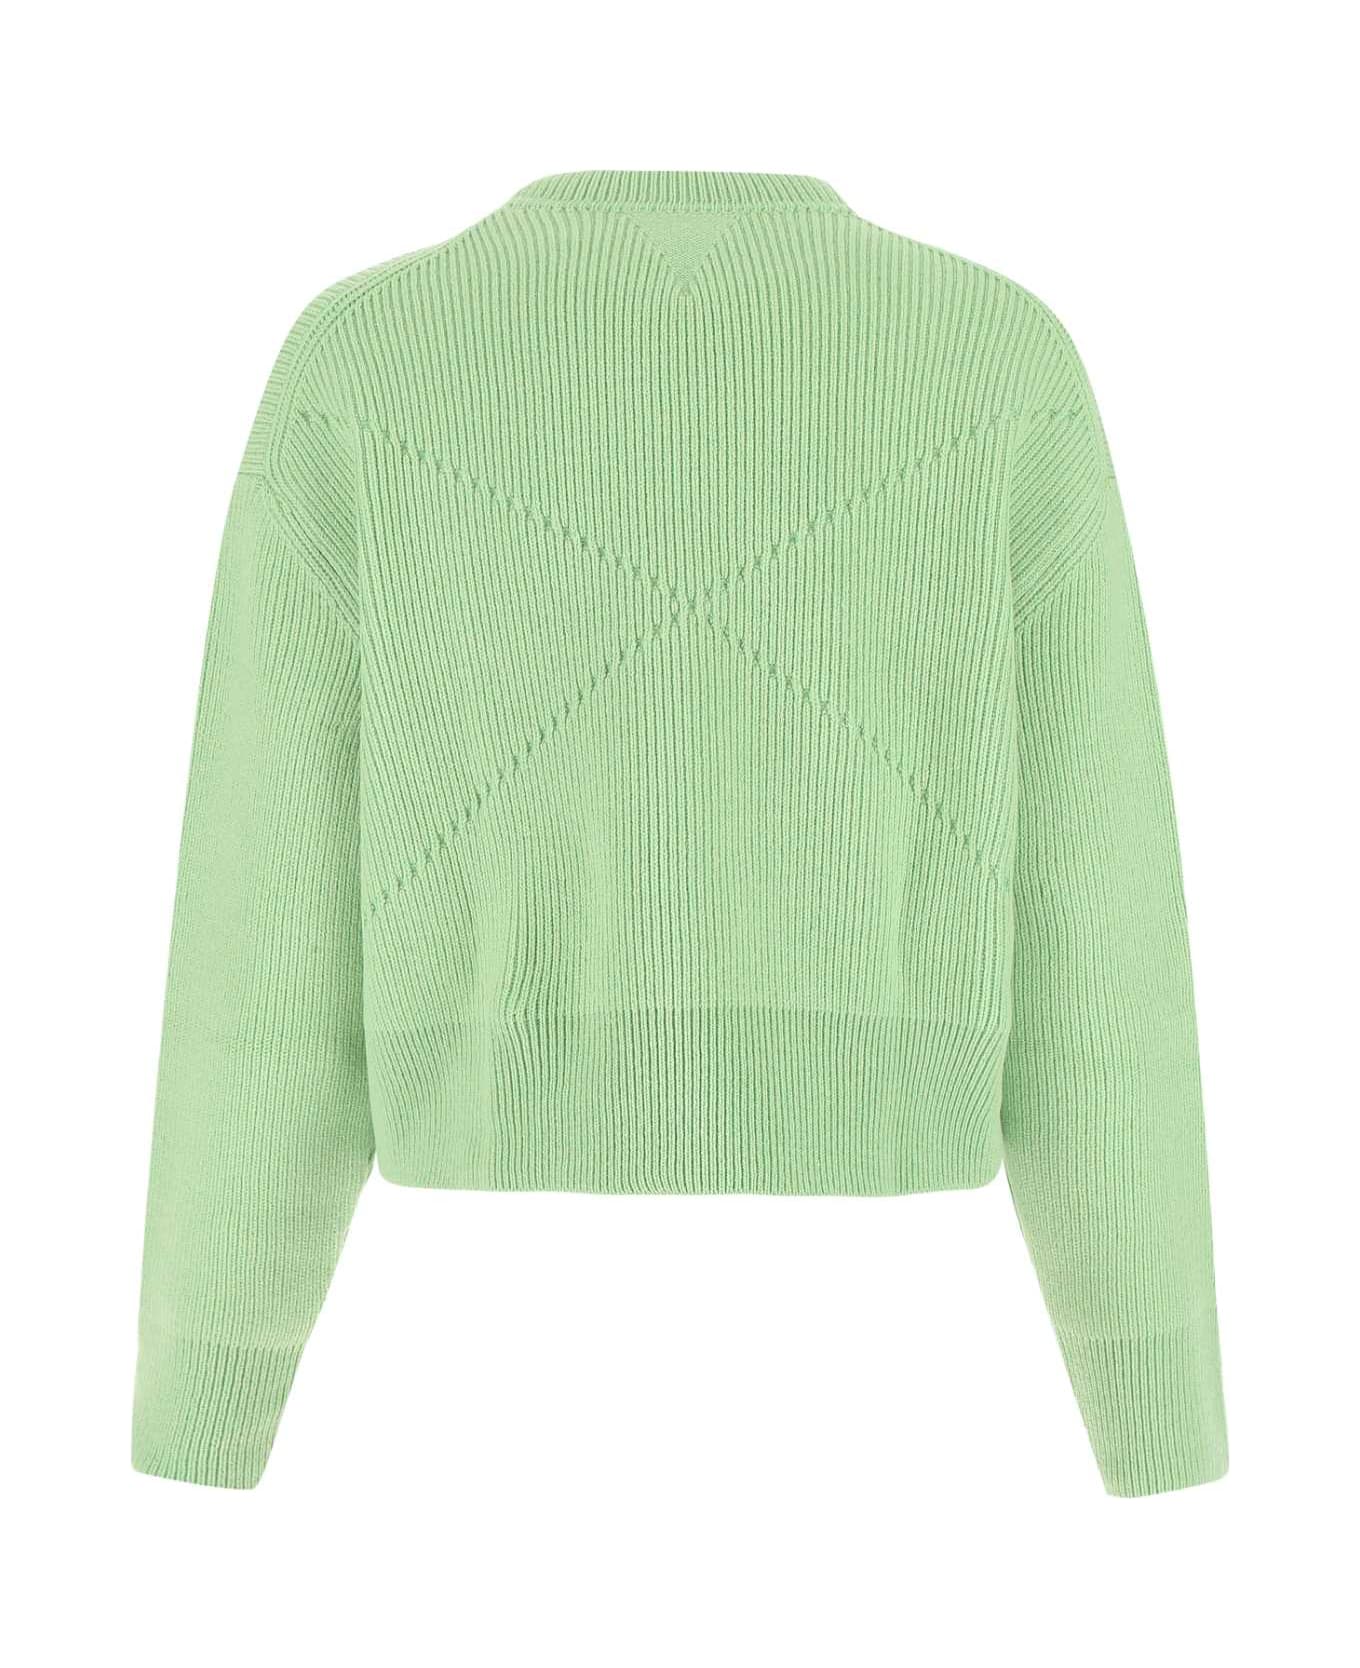 Bottega Veneta Pastel Green Stretch Cashmere Blend Sweater - 3516